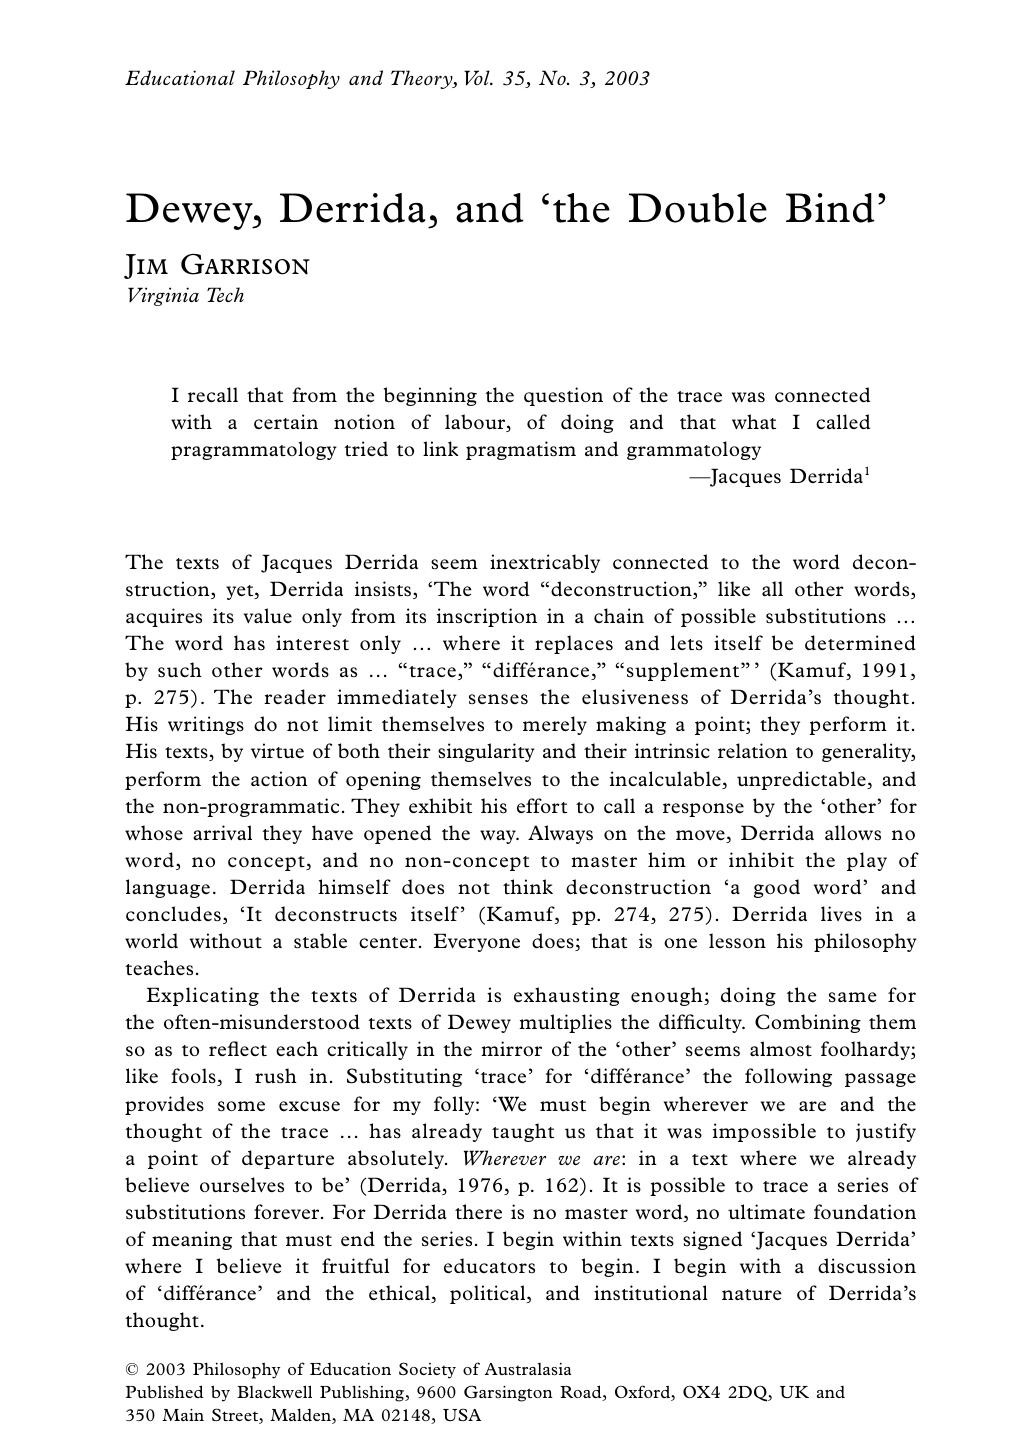 Dewey, Derrida, and 'The Double Bind' - Paper